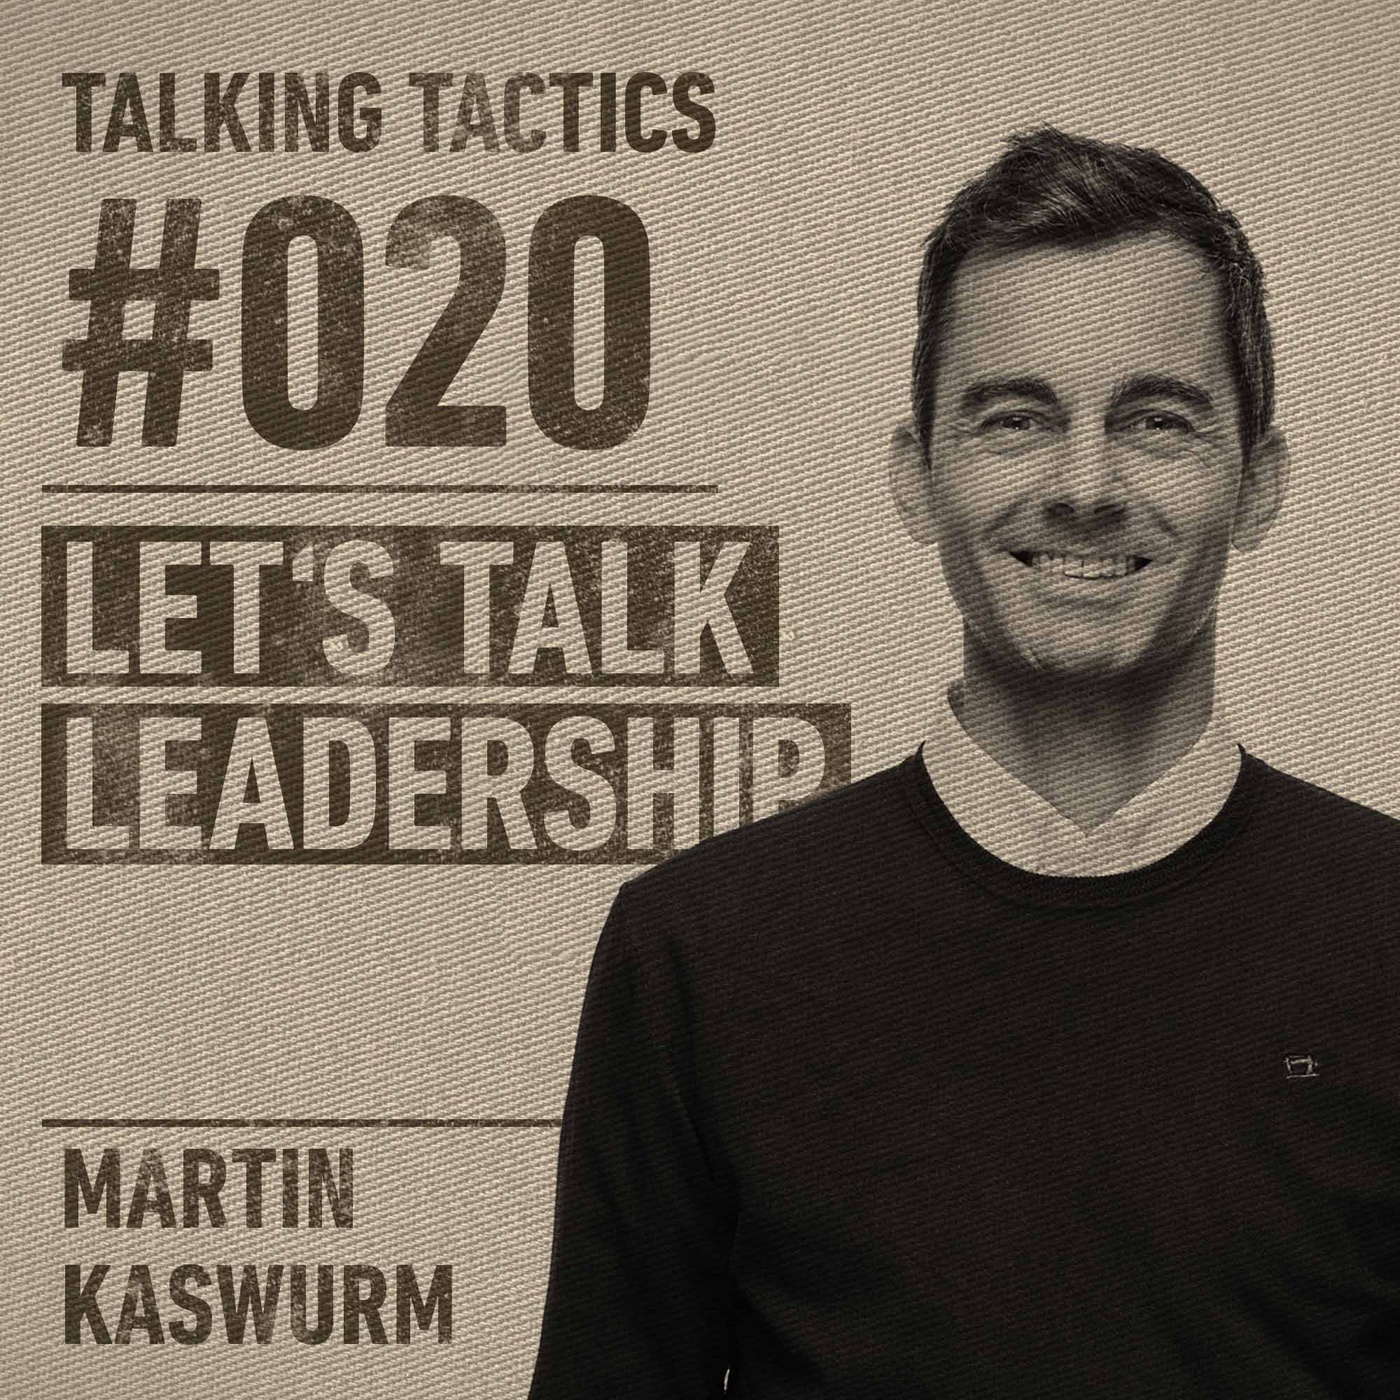 #020 - Martin Kaswurm